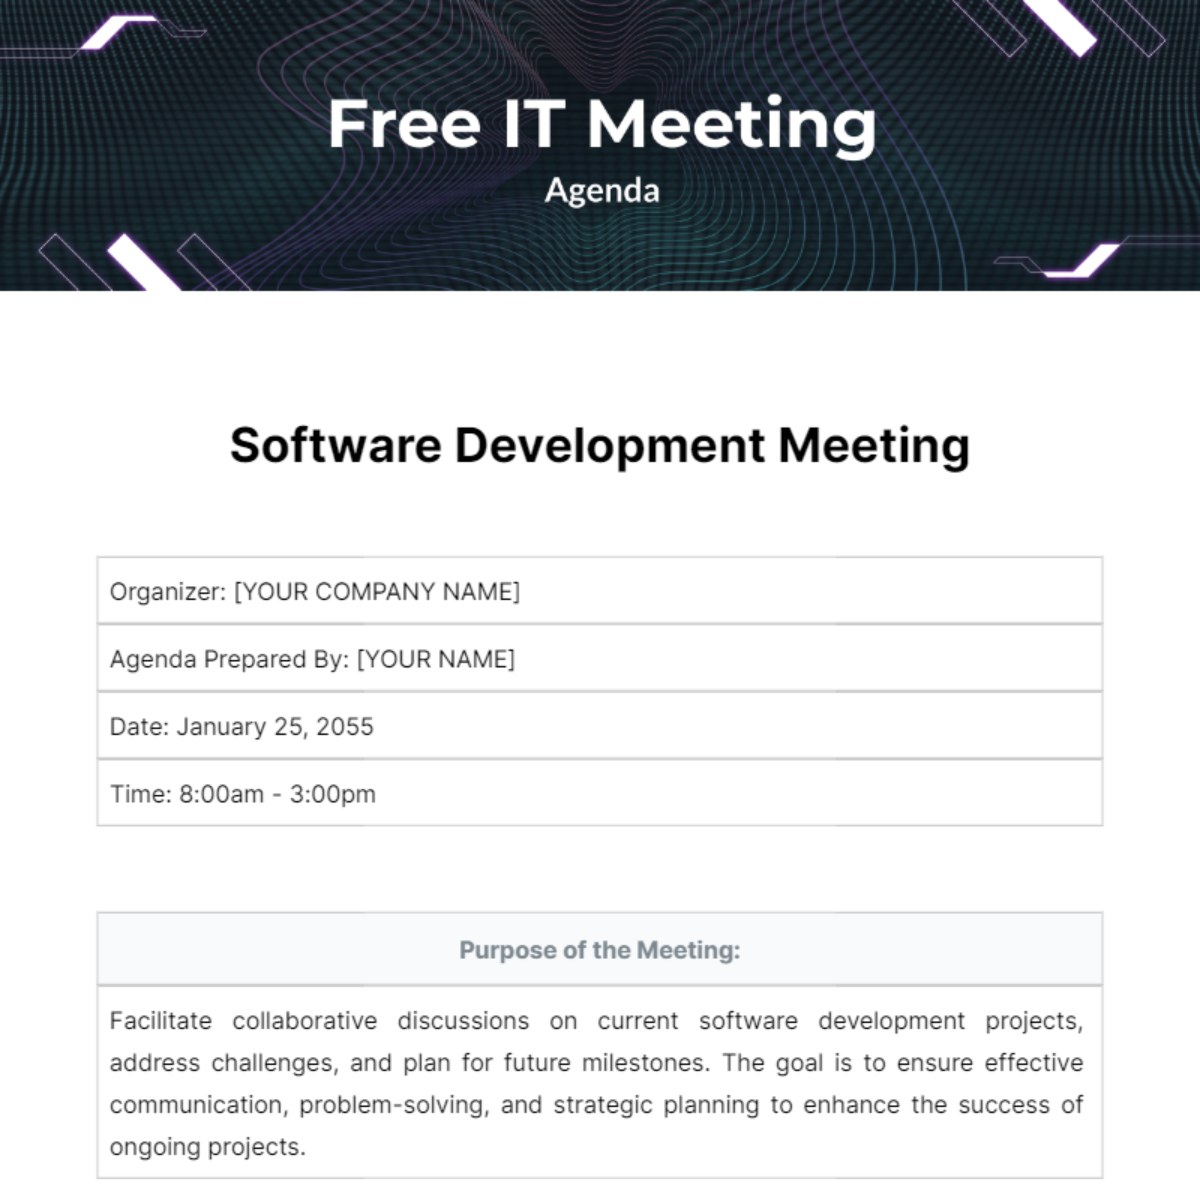 Free IT Meeting Agenda Template